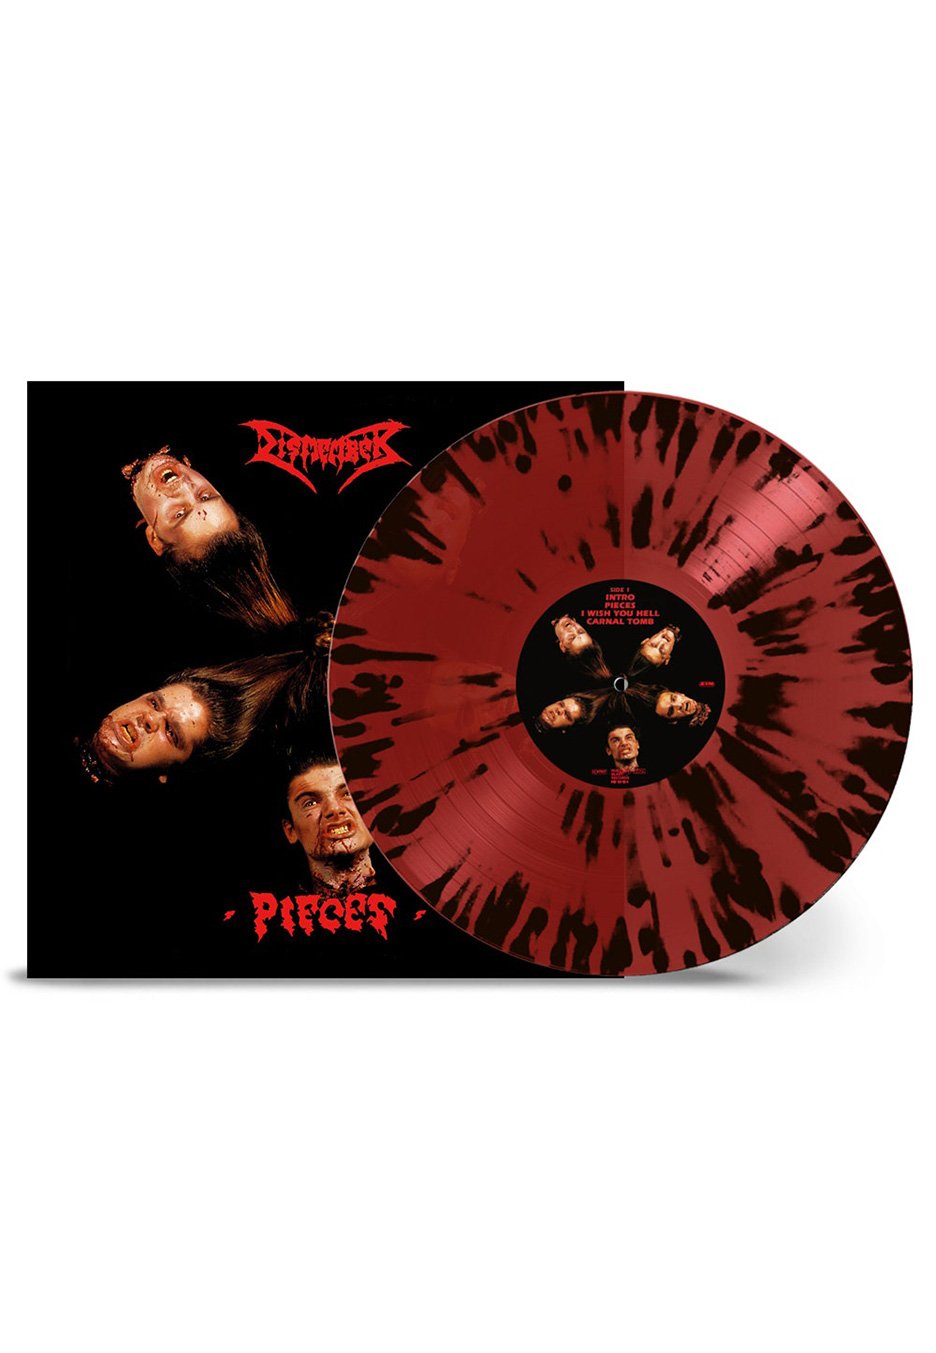 Dismember - Pieces (Reissue) Transparent Red/Black - Splattered Mini Vinyl